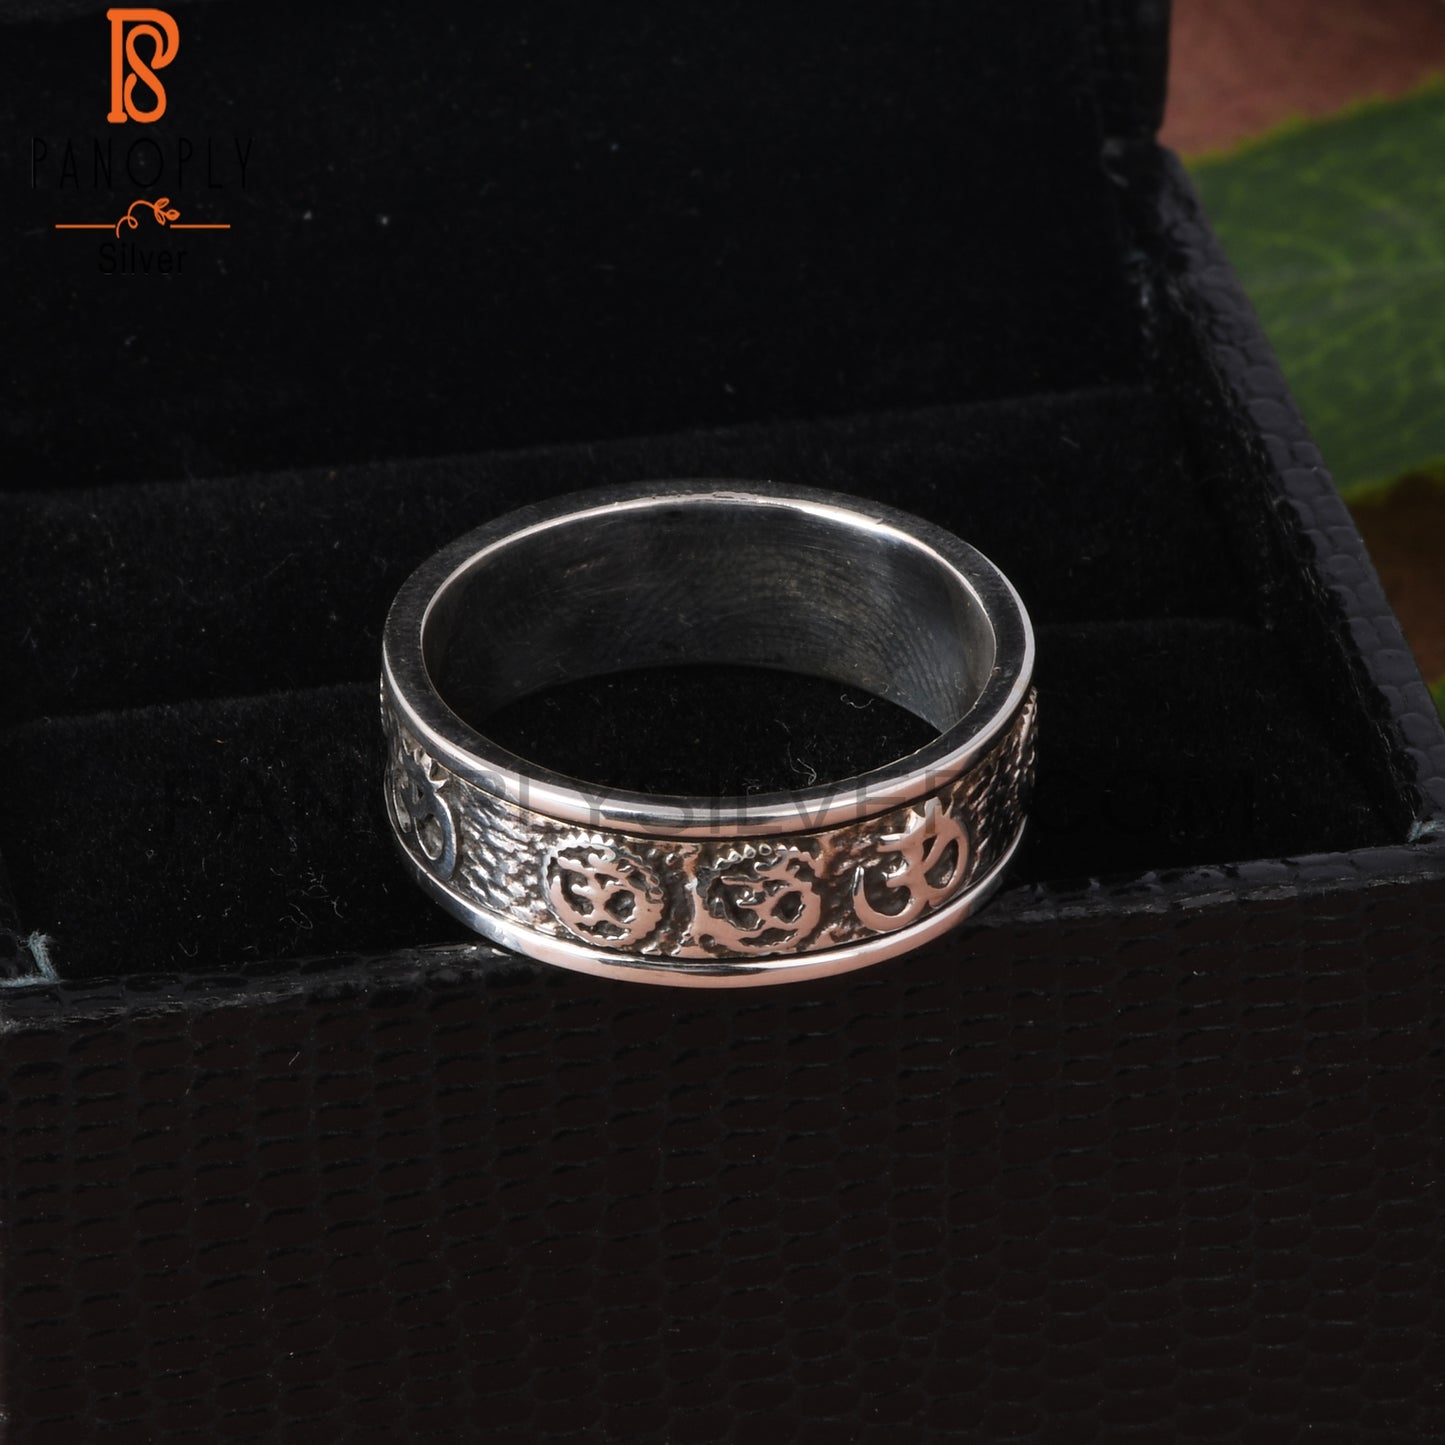 Om Shiv Designer 925 Sterling Silver Ring